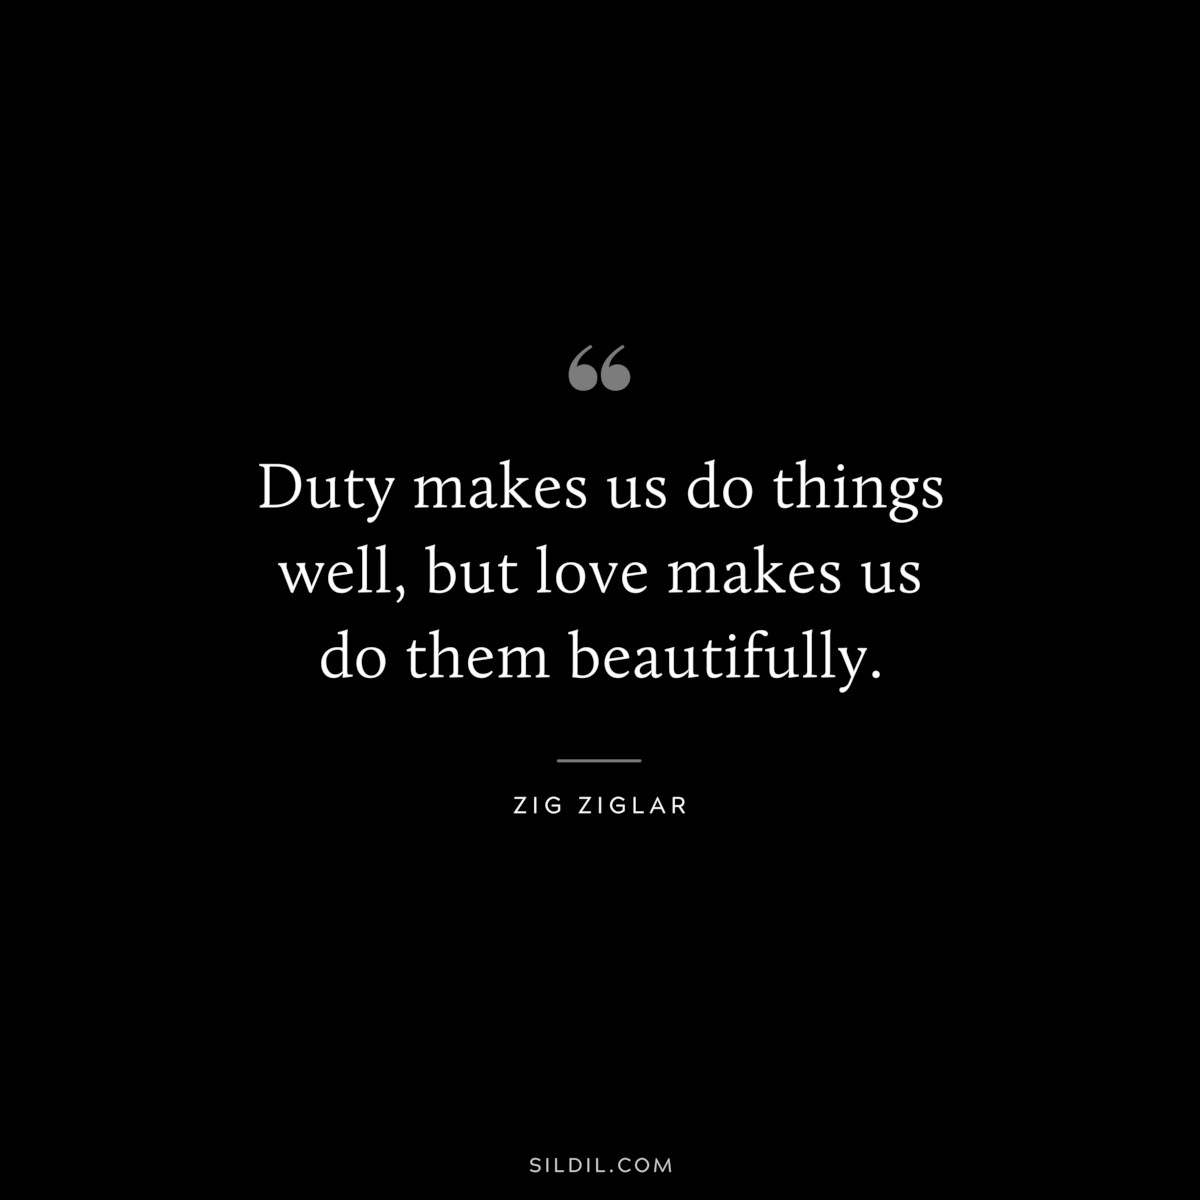 Duty makes us do things well, but love makes us do them beautifully. ― Zig Ziglar